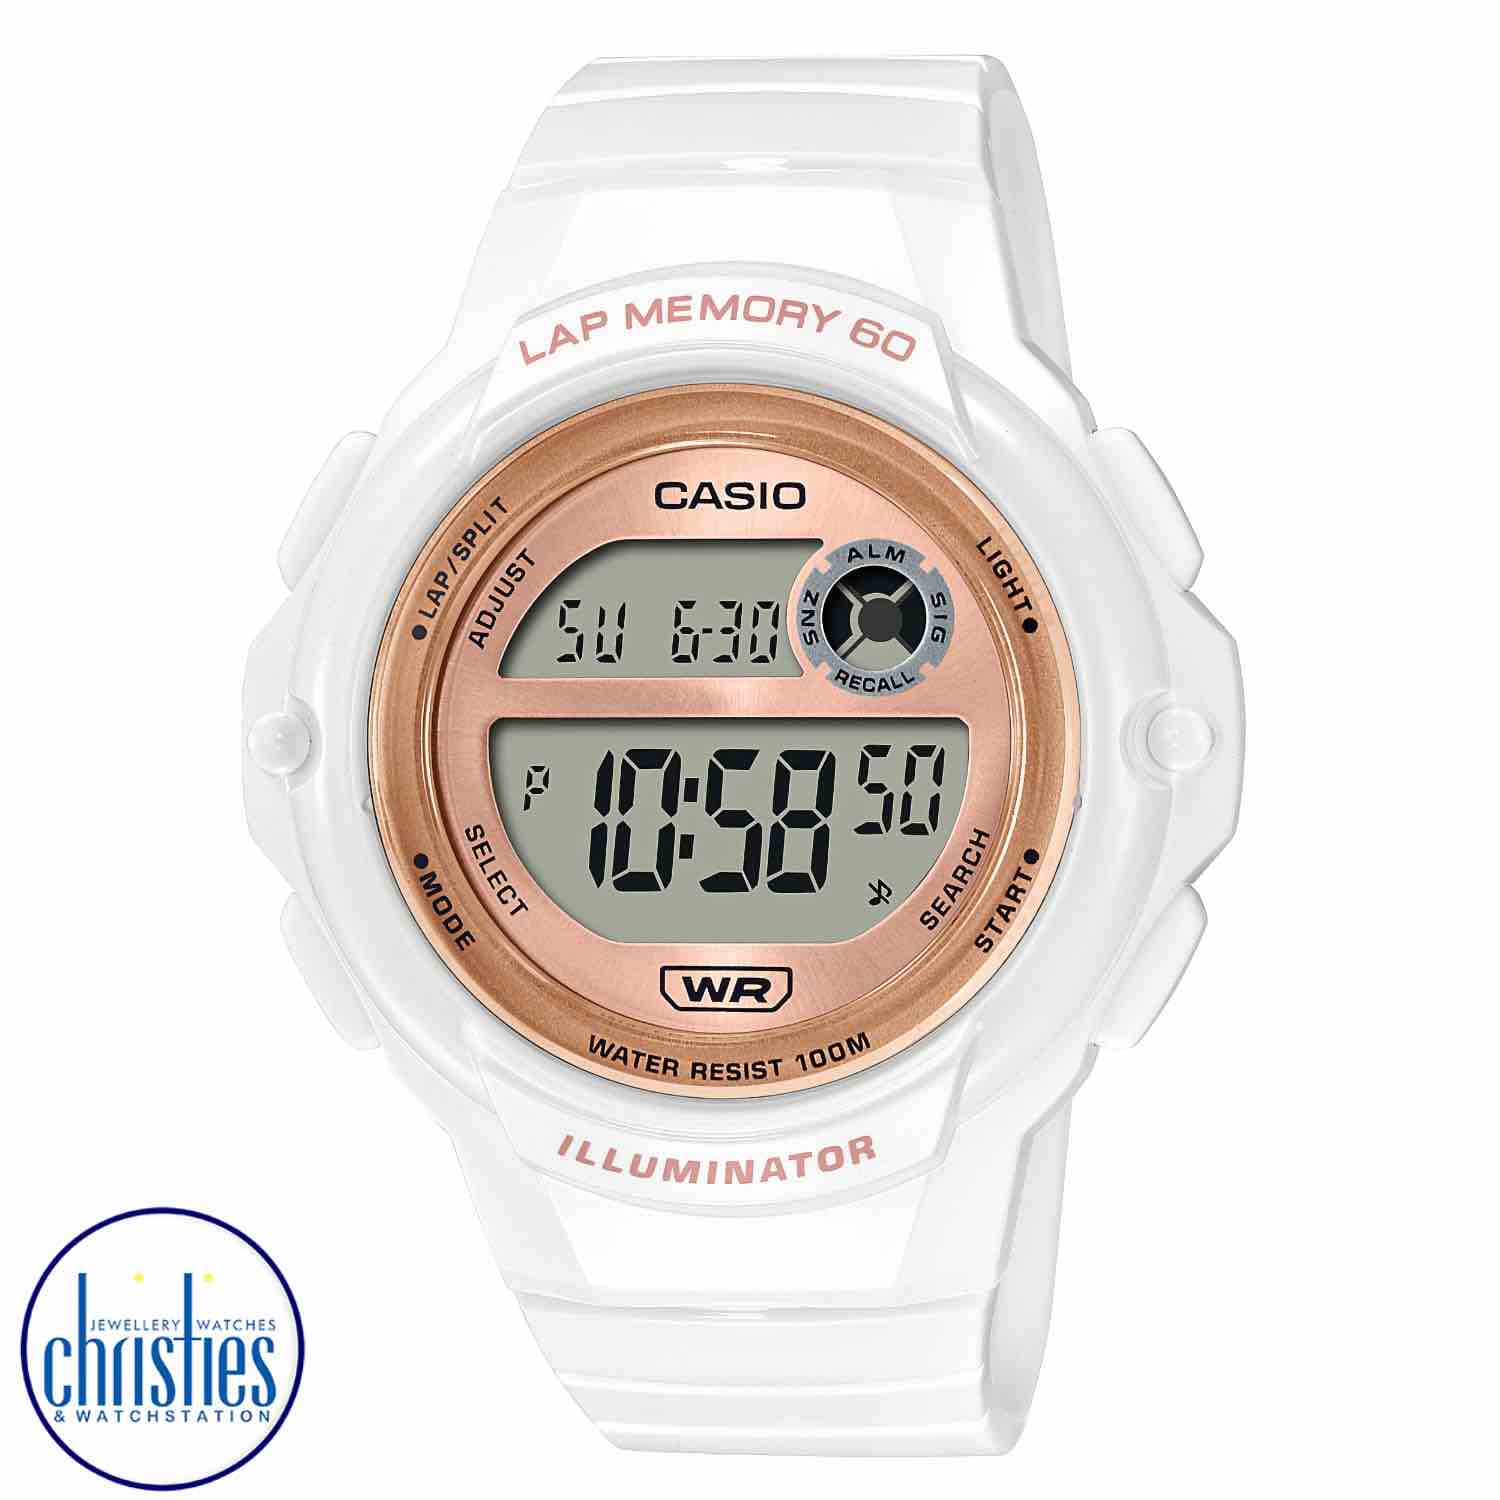 LWS1200H-7A2 Casio 60 Lap Memory Watch cheap casio watches nz